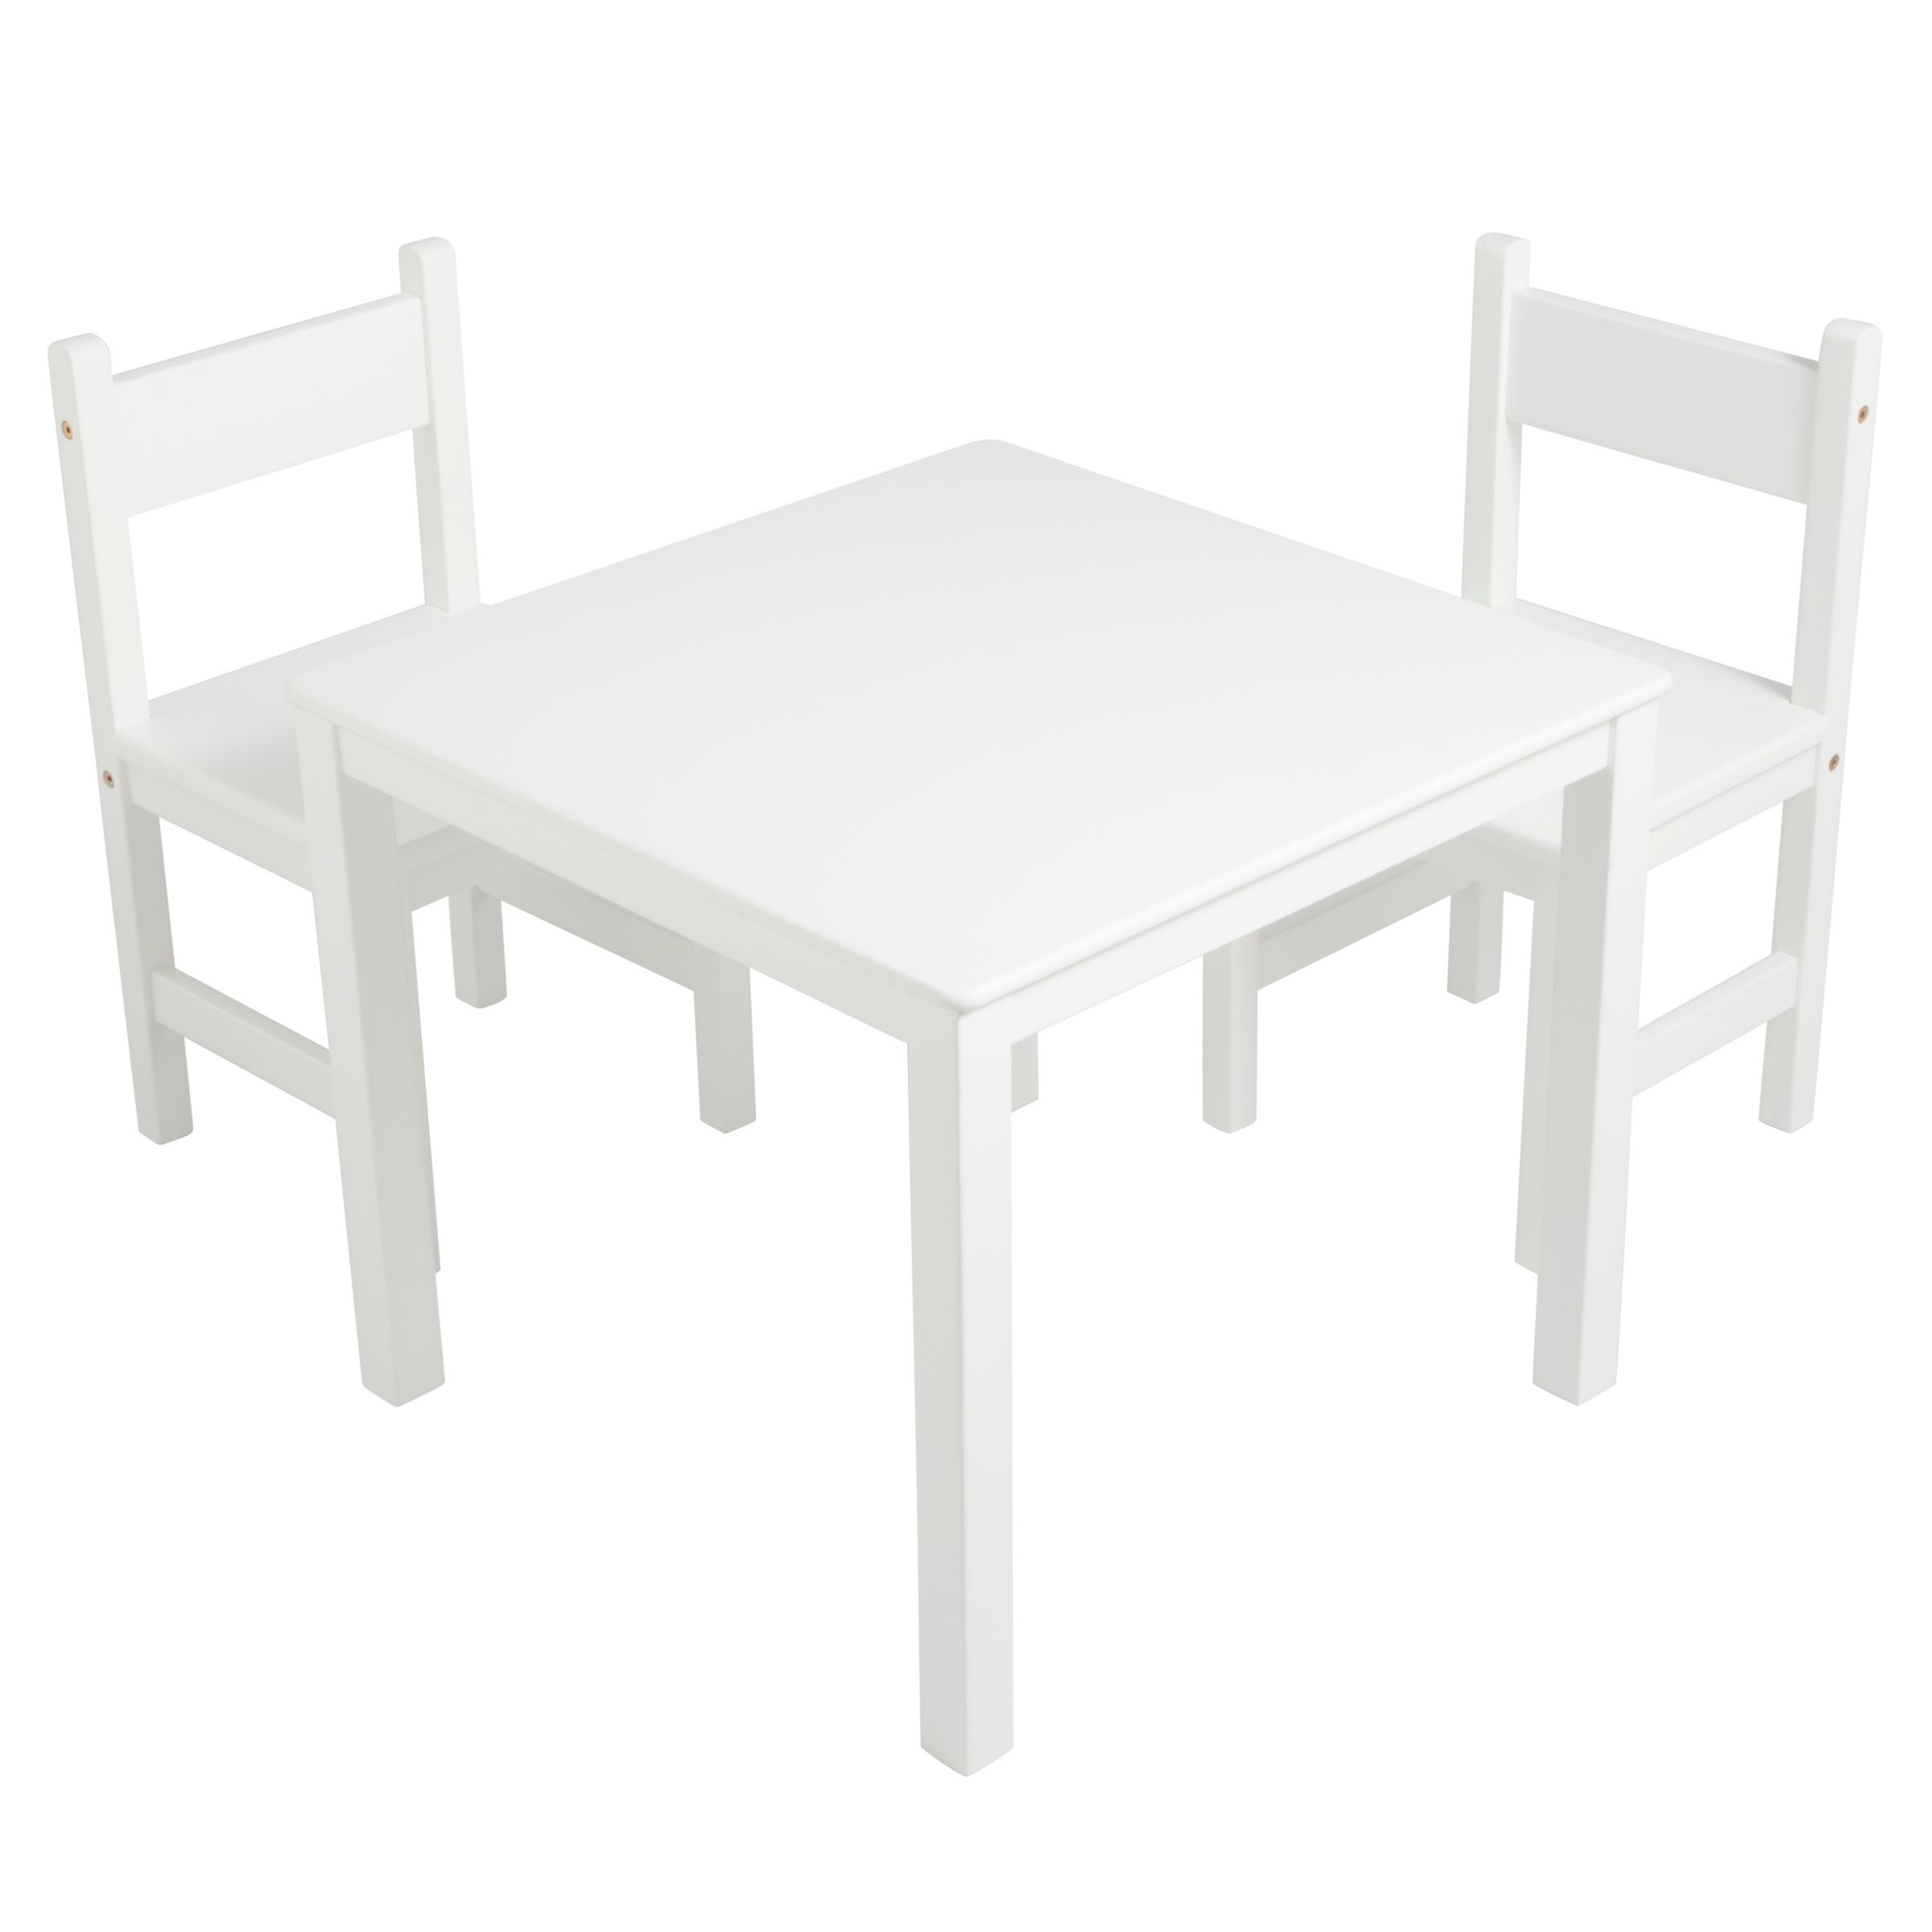 white plastic kids table